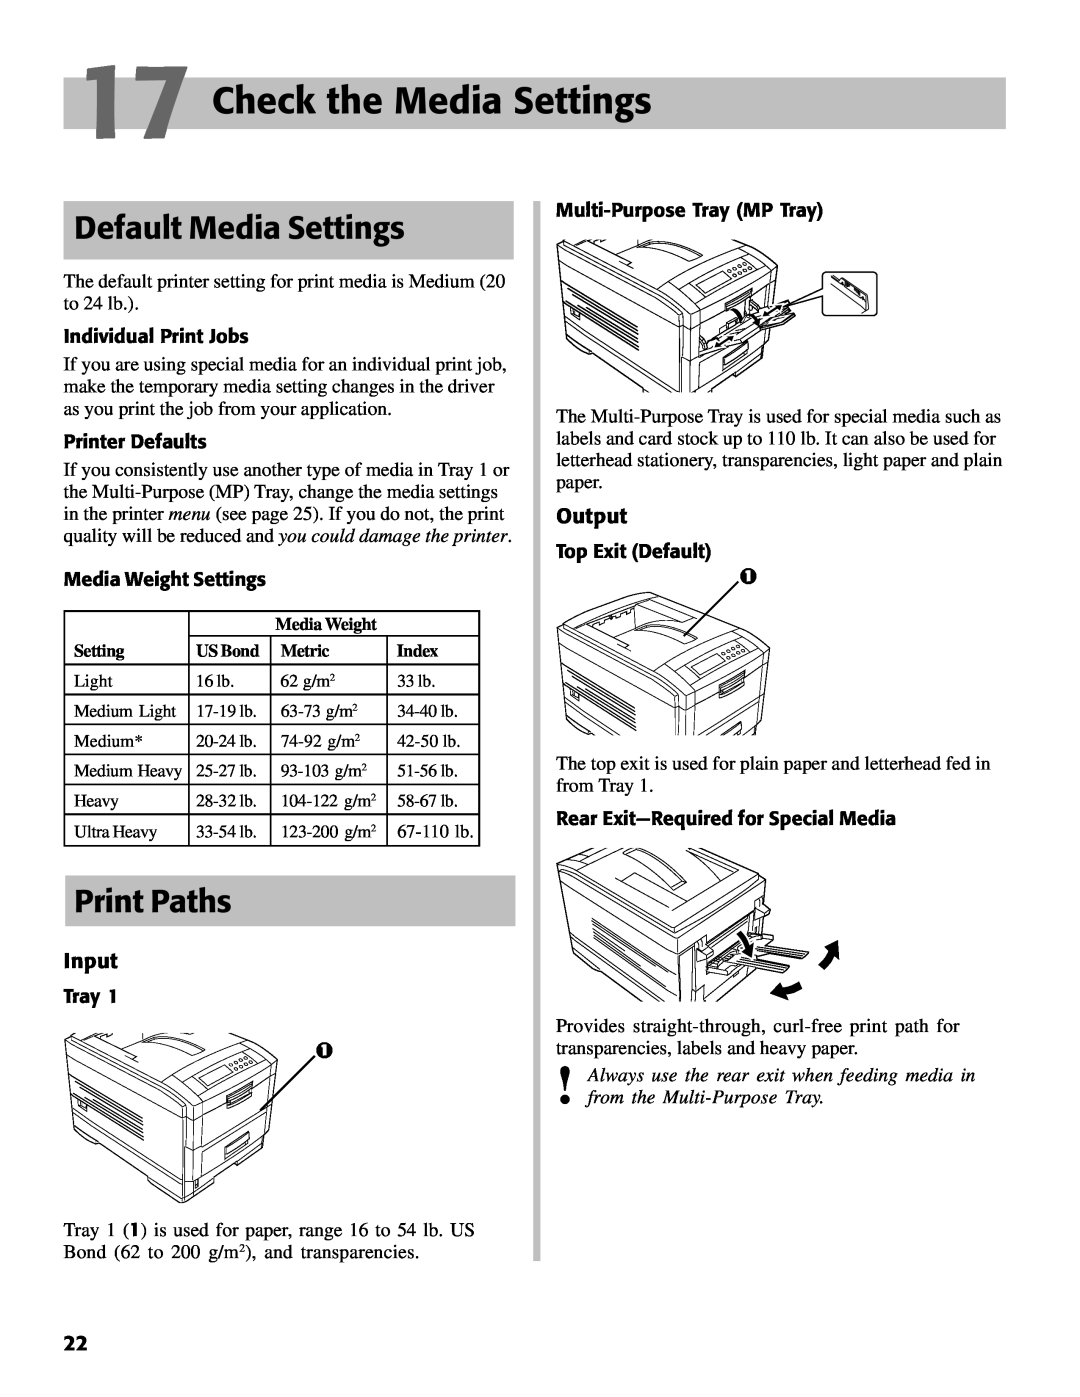 Oki C7000 setup guide Check the Media Settings, Default Media Settings, Print Paths, Input, Output 